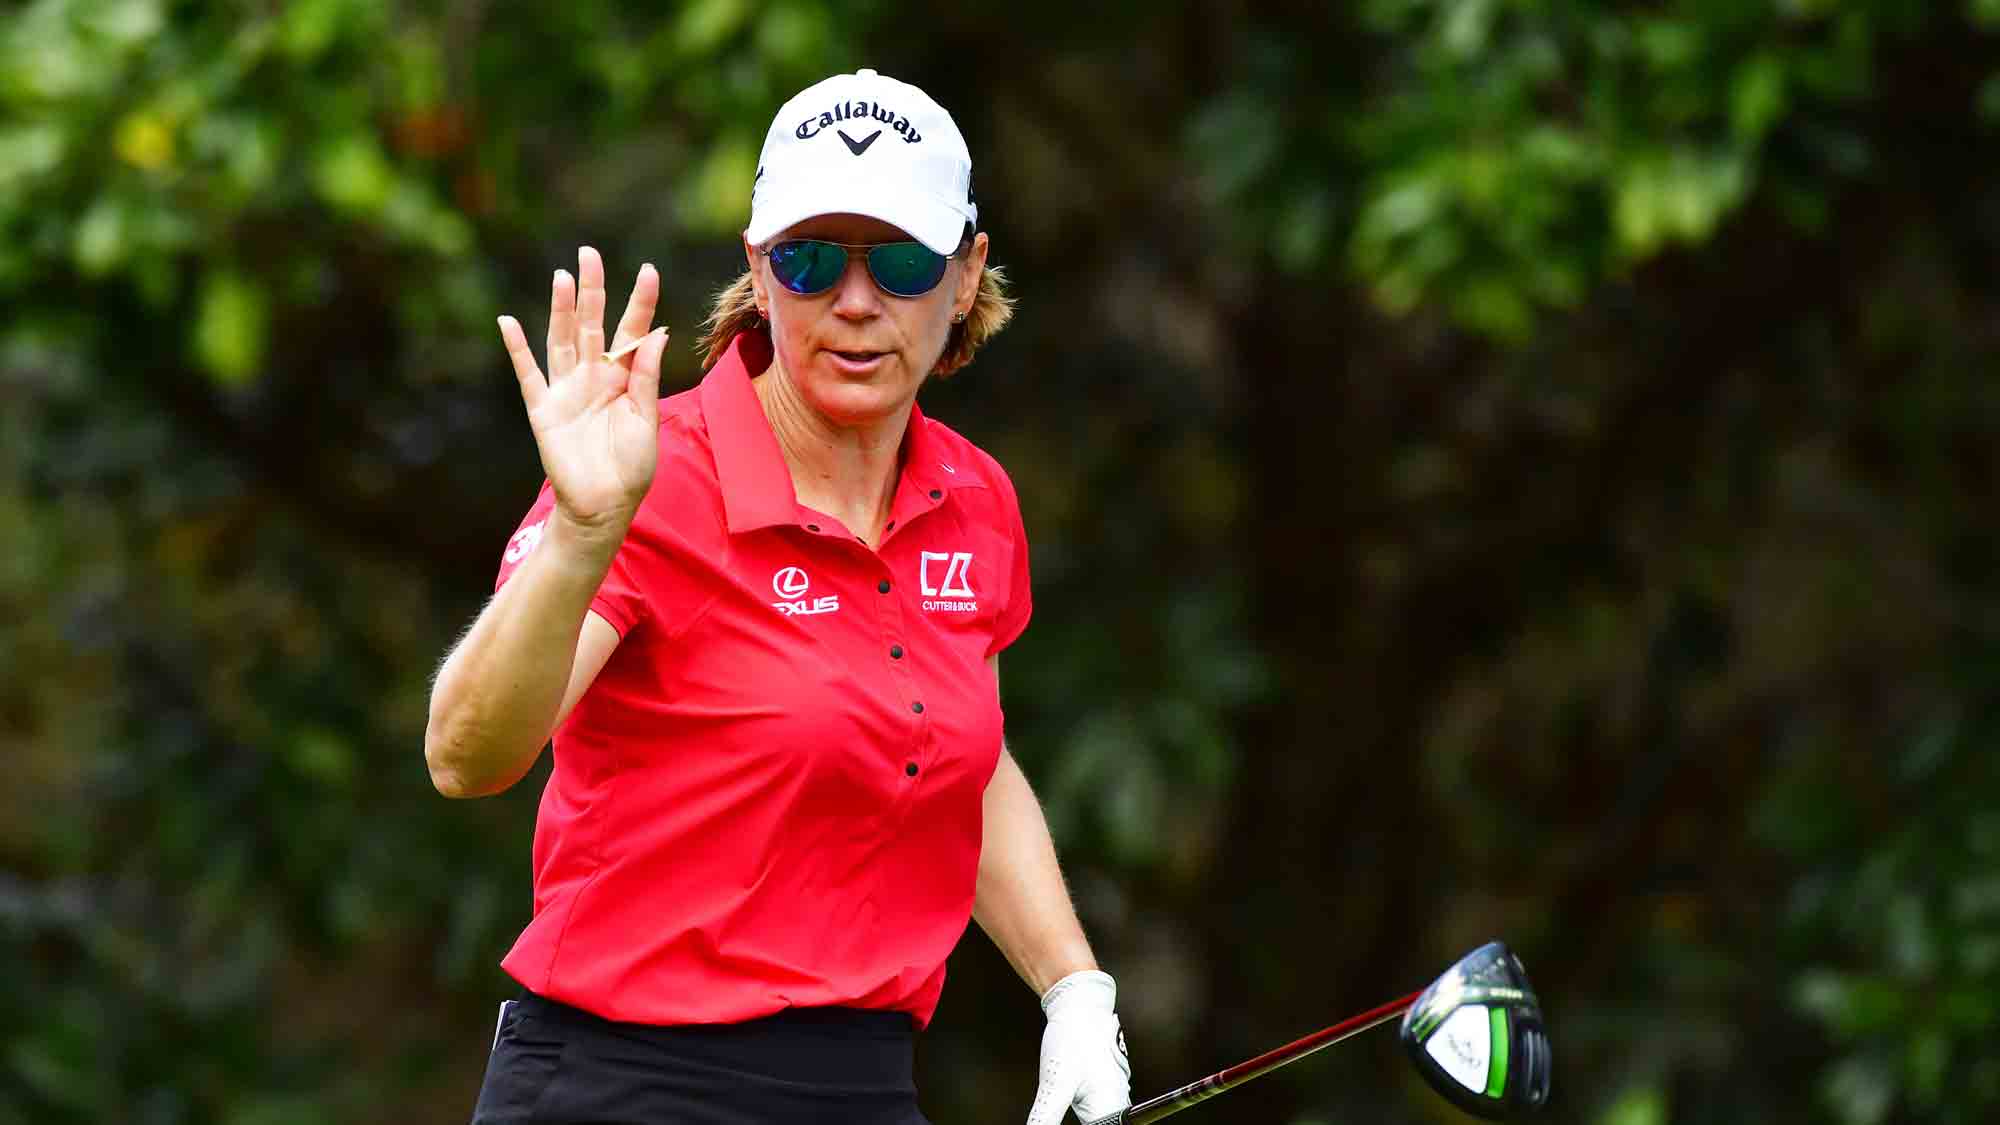 Hall-of-Famer Annika Sorenstam to Host Tampa Bays Signature LPGA Tour Event LPGA Ladies Professional Golf Association